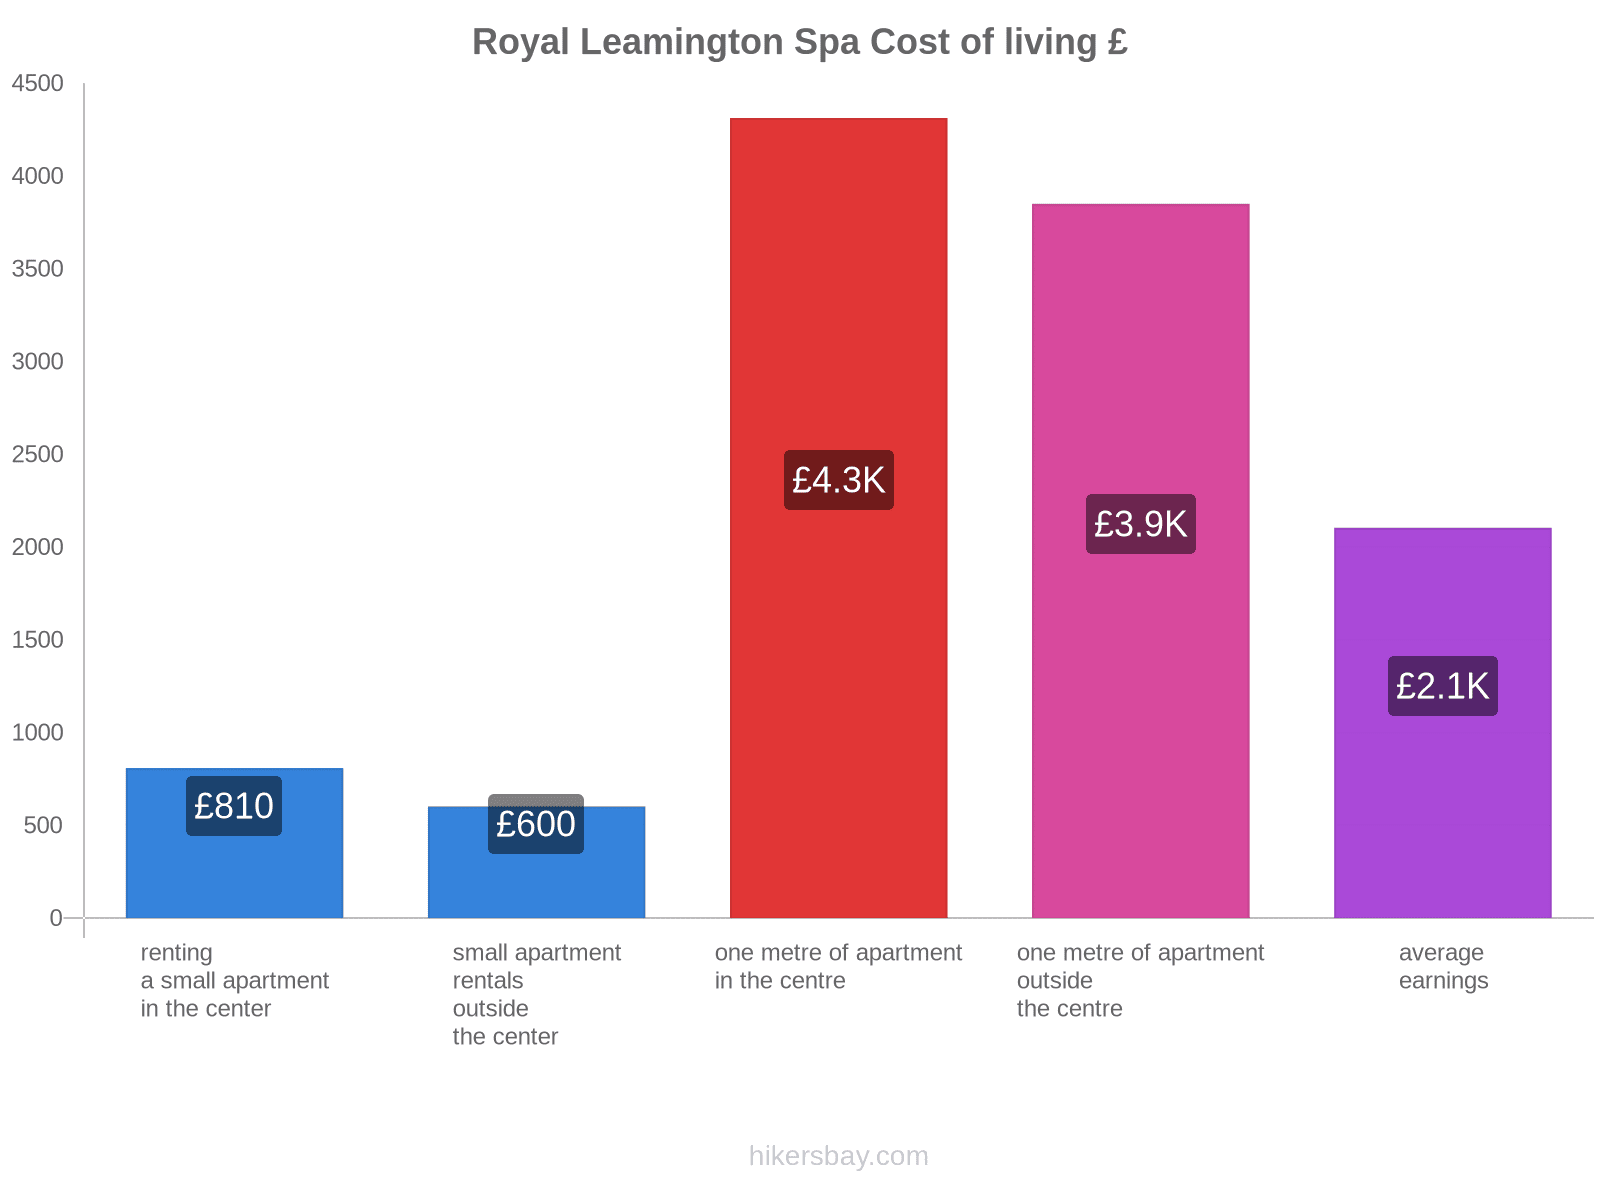 Royal Leamington Spa cost of living hikersbay.com